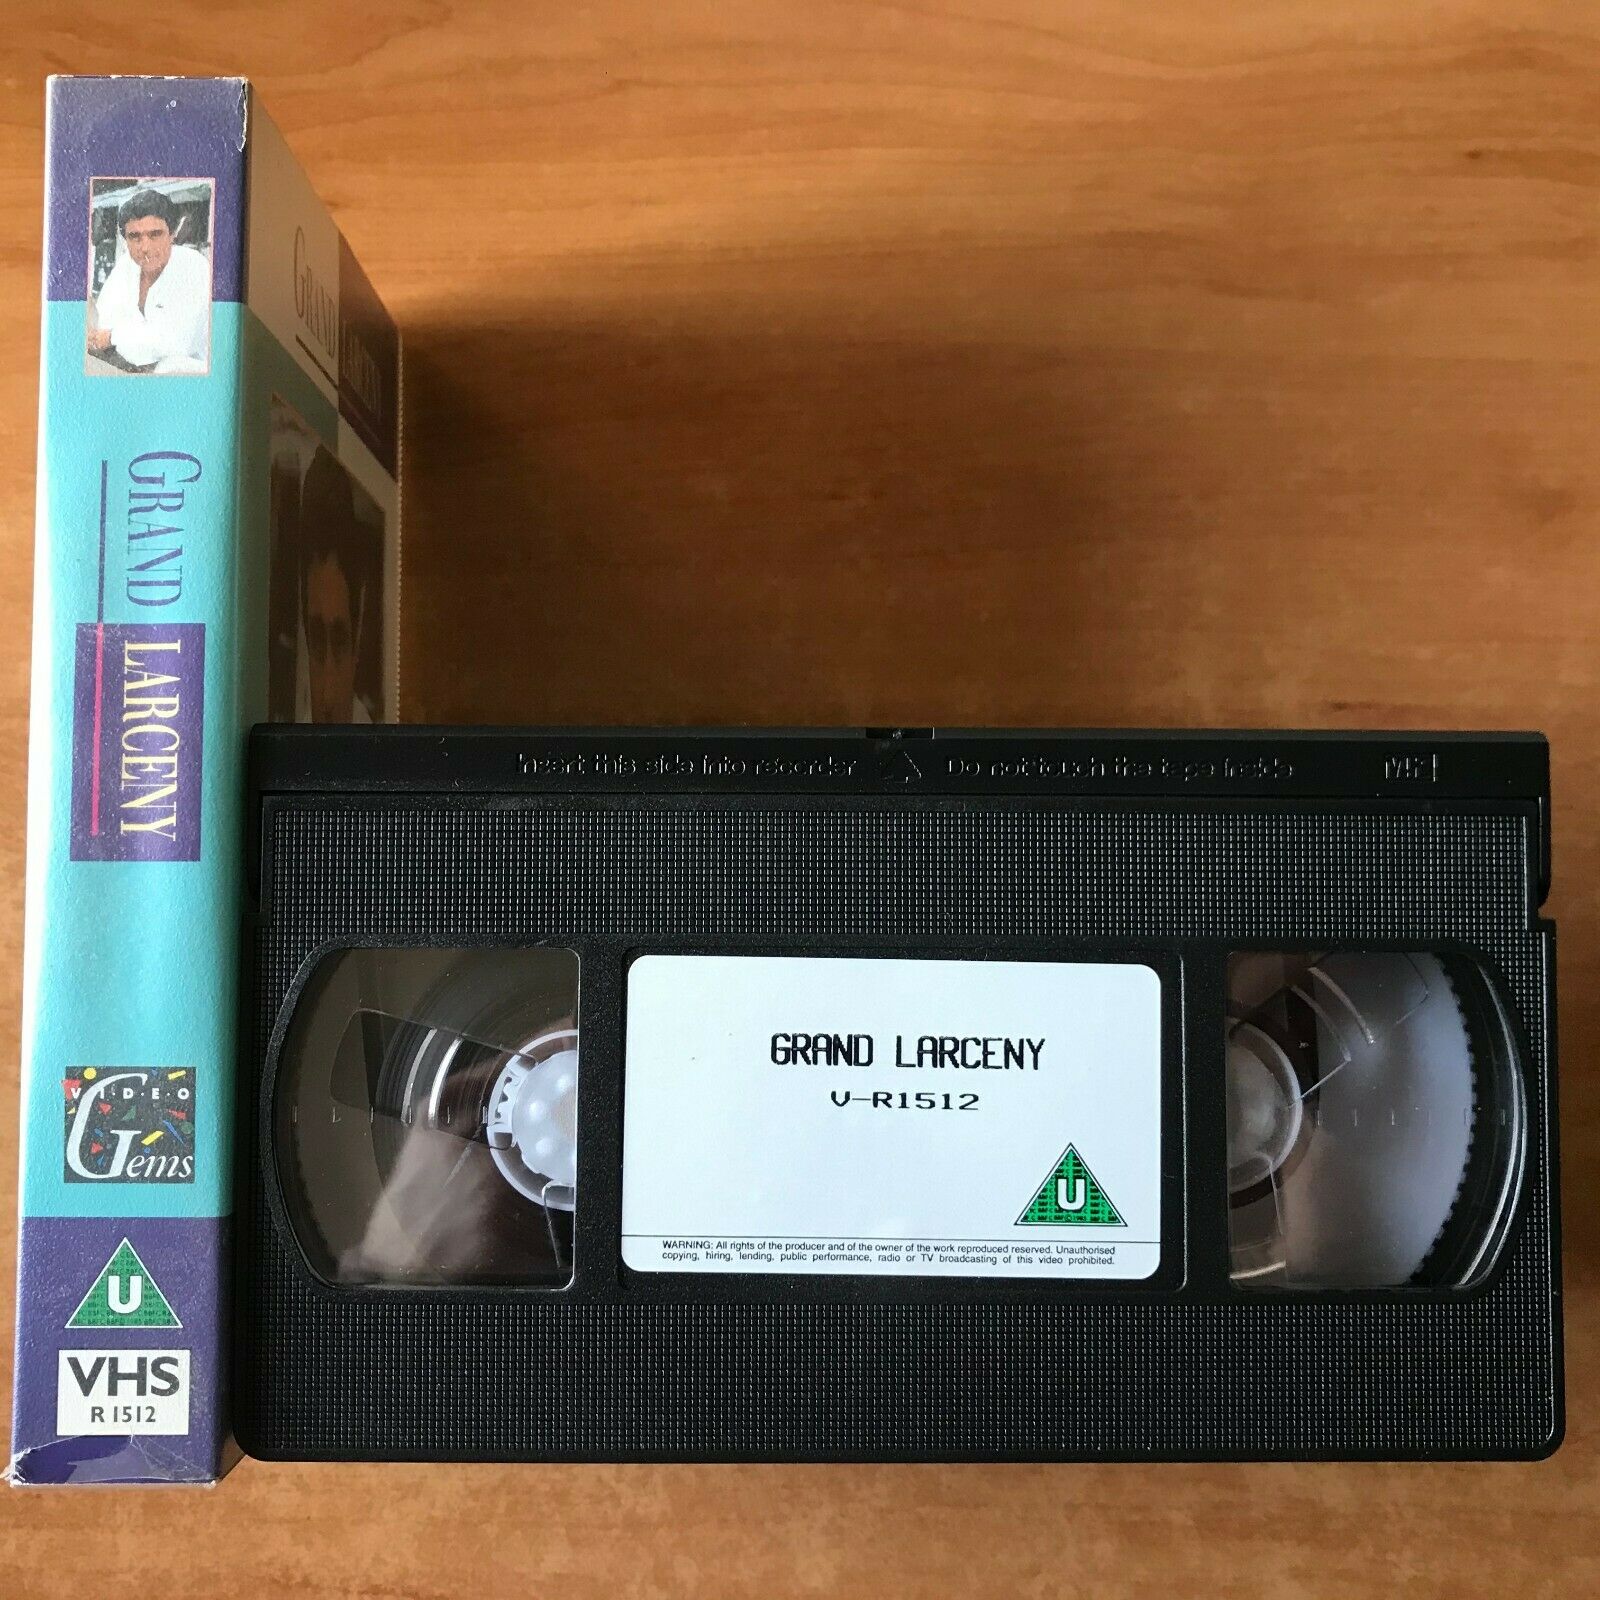 Grand Larceny (1987): Made For TV - Thriller - Ian McShane / Omar Shariff - VHS-